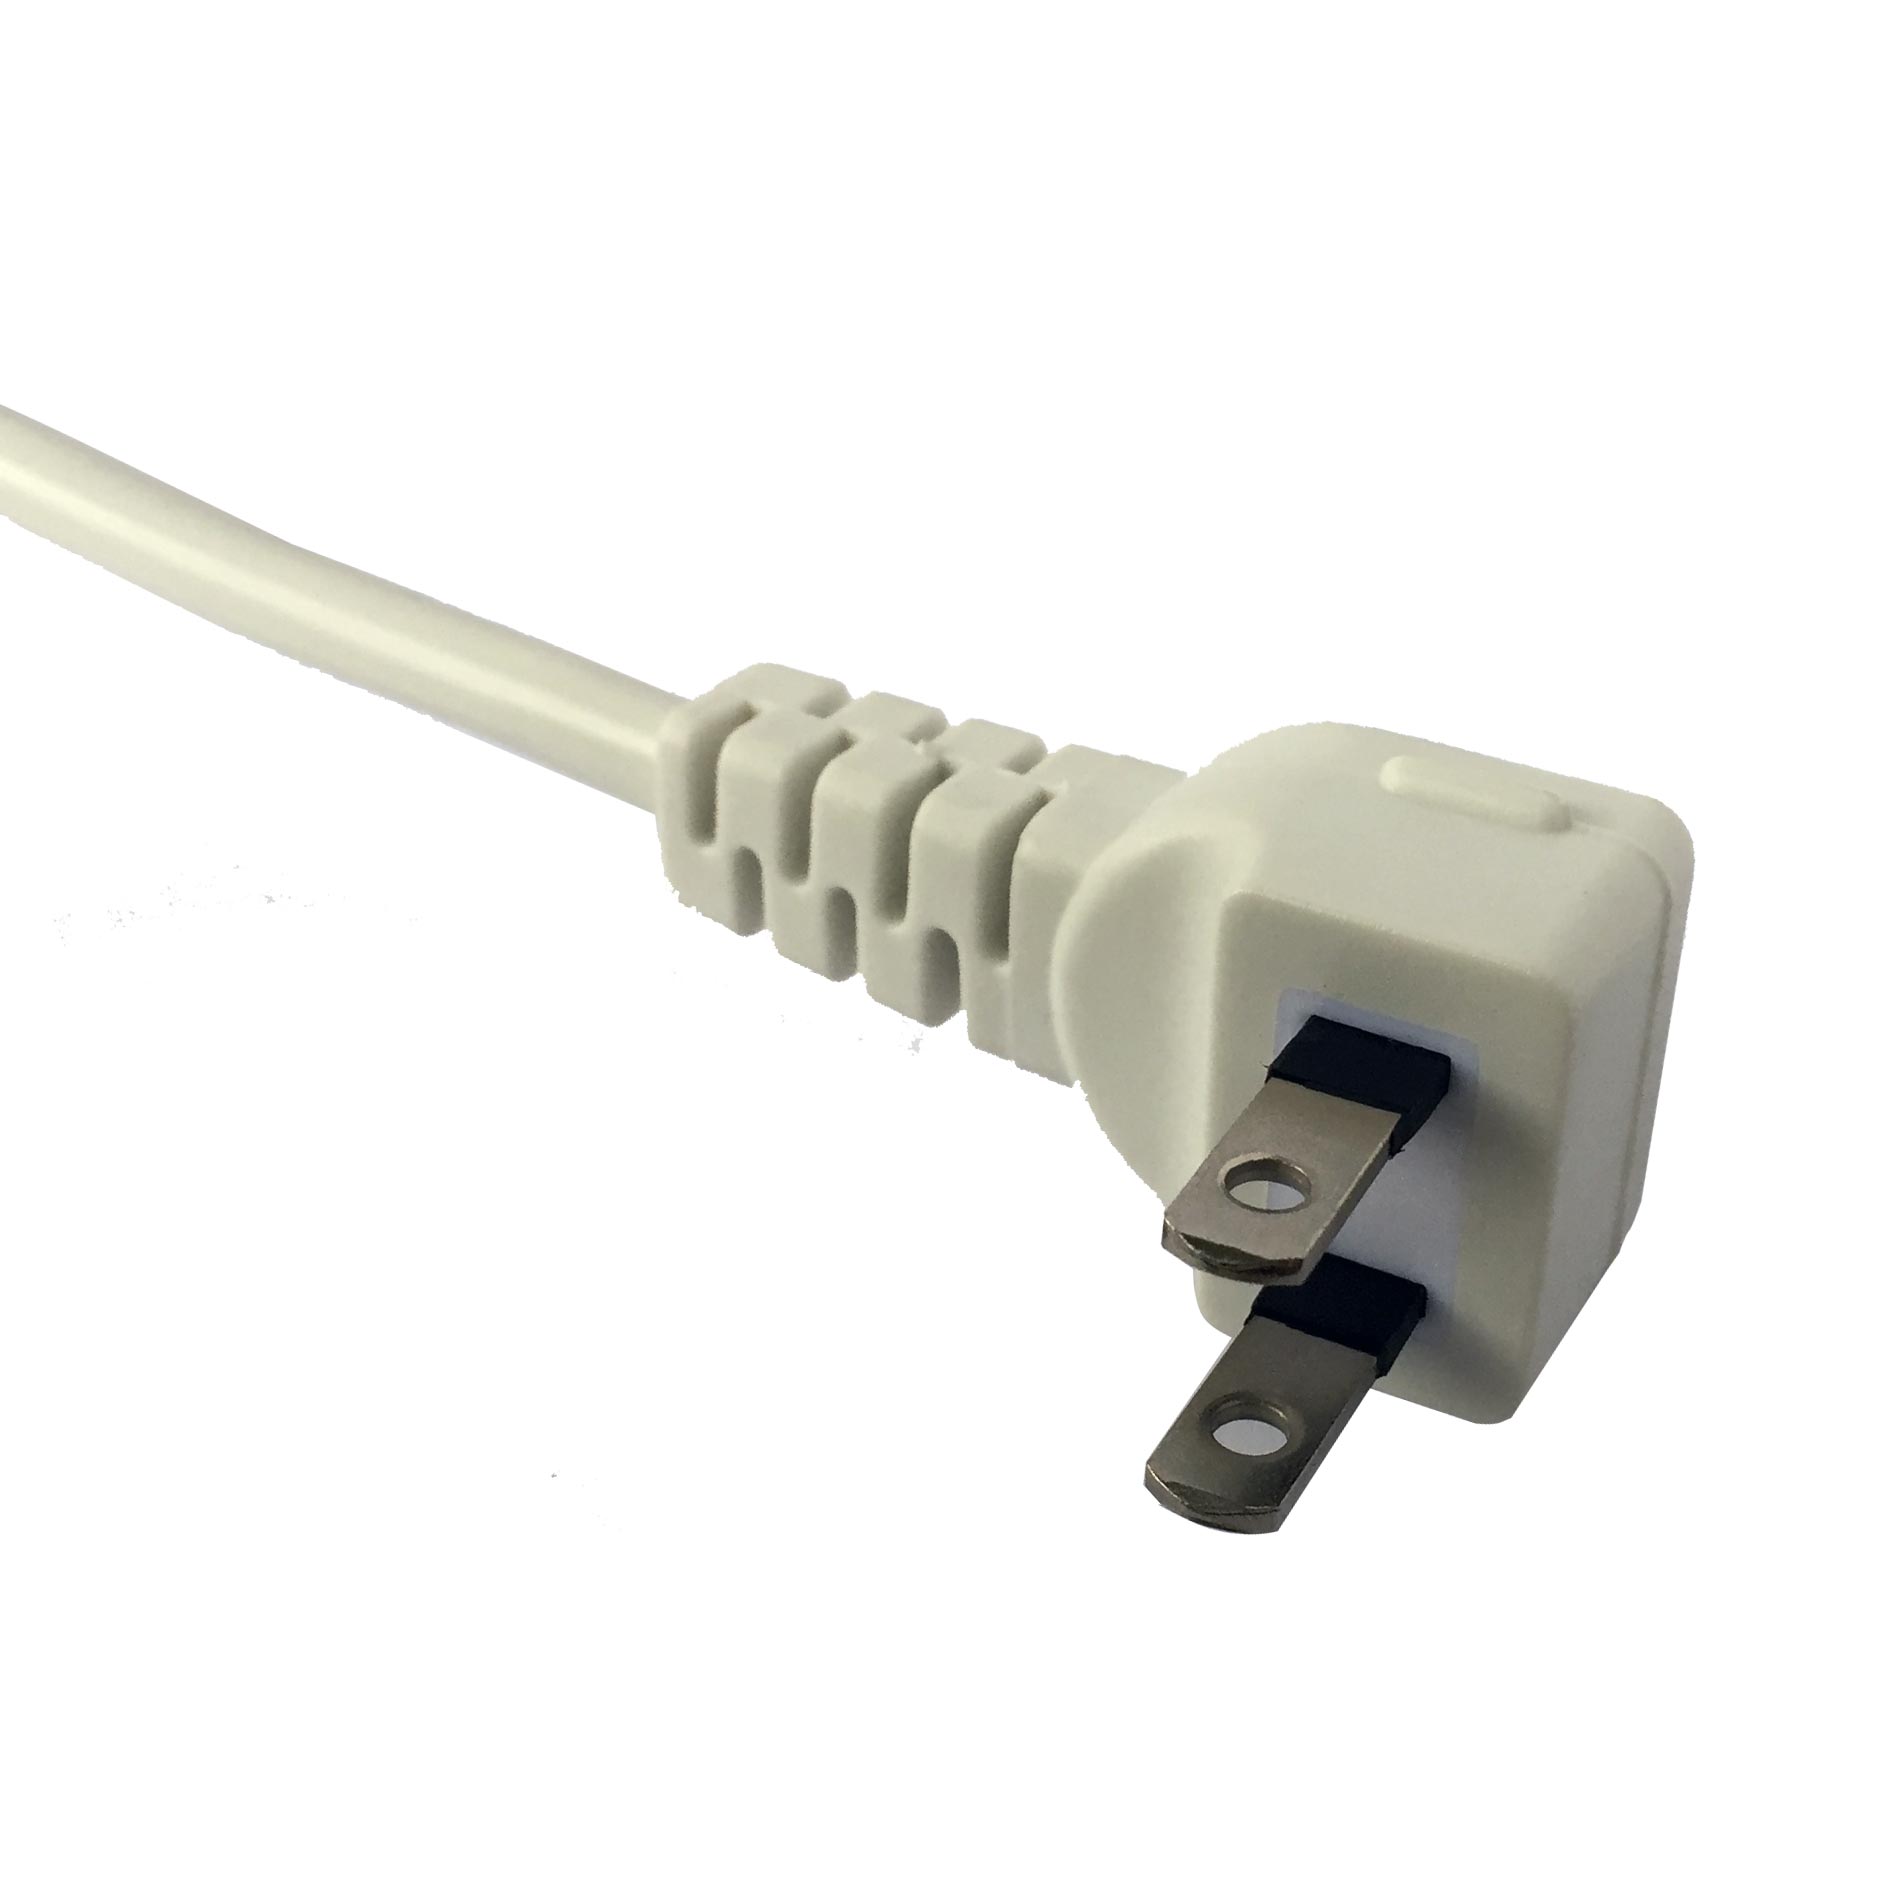 Japan Power Cord 15 Amp 2 Wire Angle Plug, JIS 8303 Standard,AC Power Supply Cords, Custom Length,PSE JET Approved